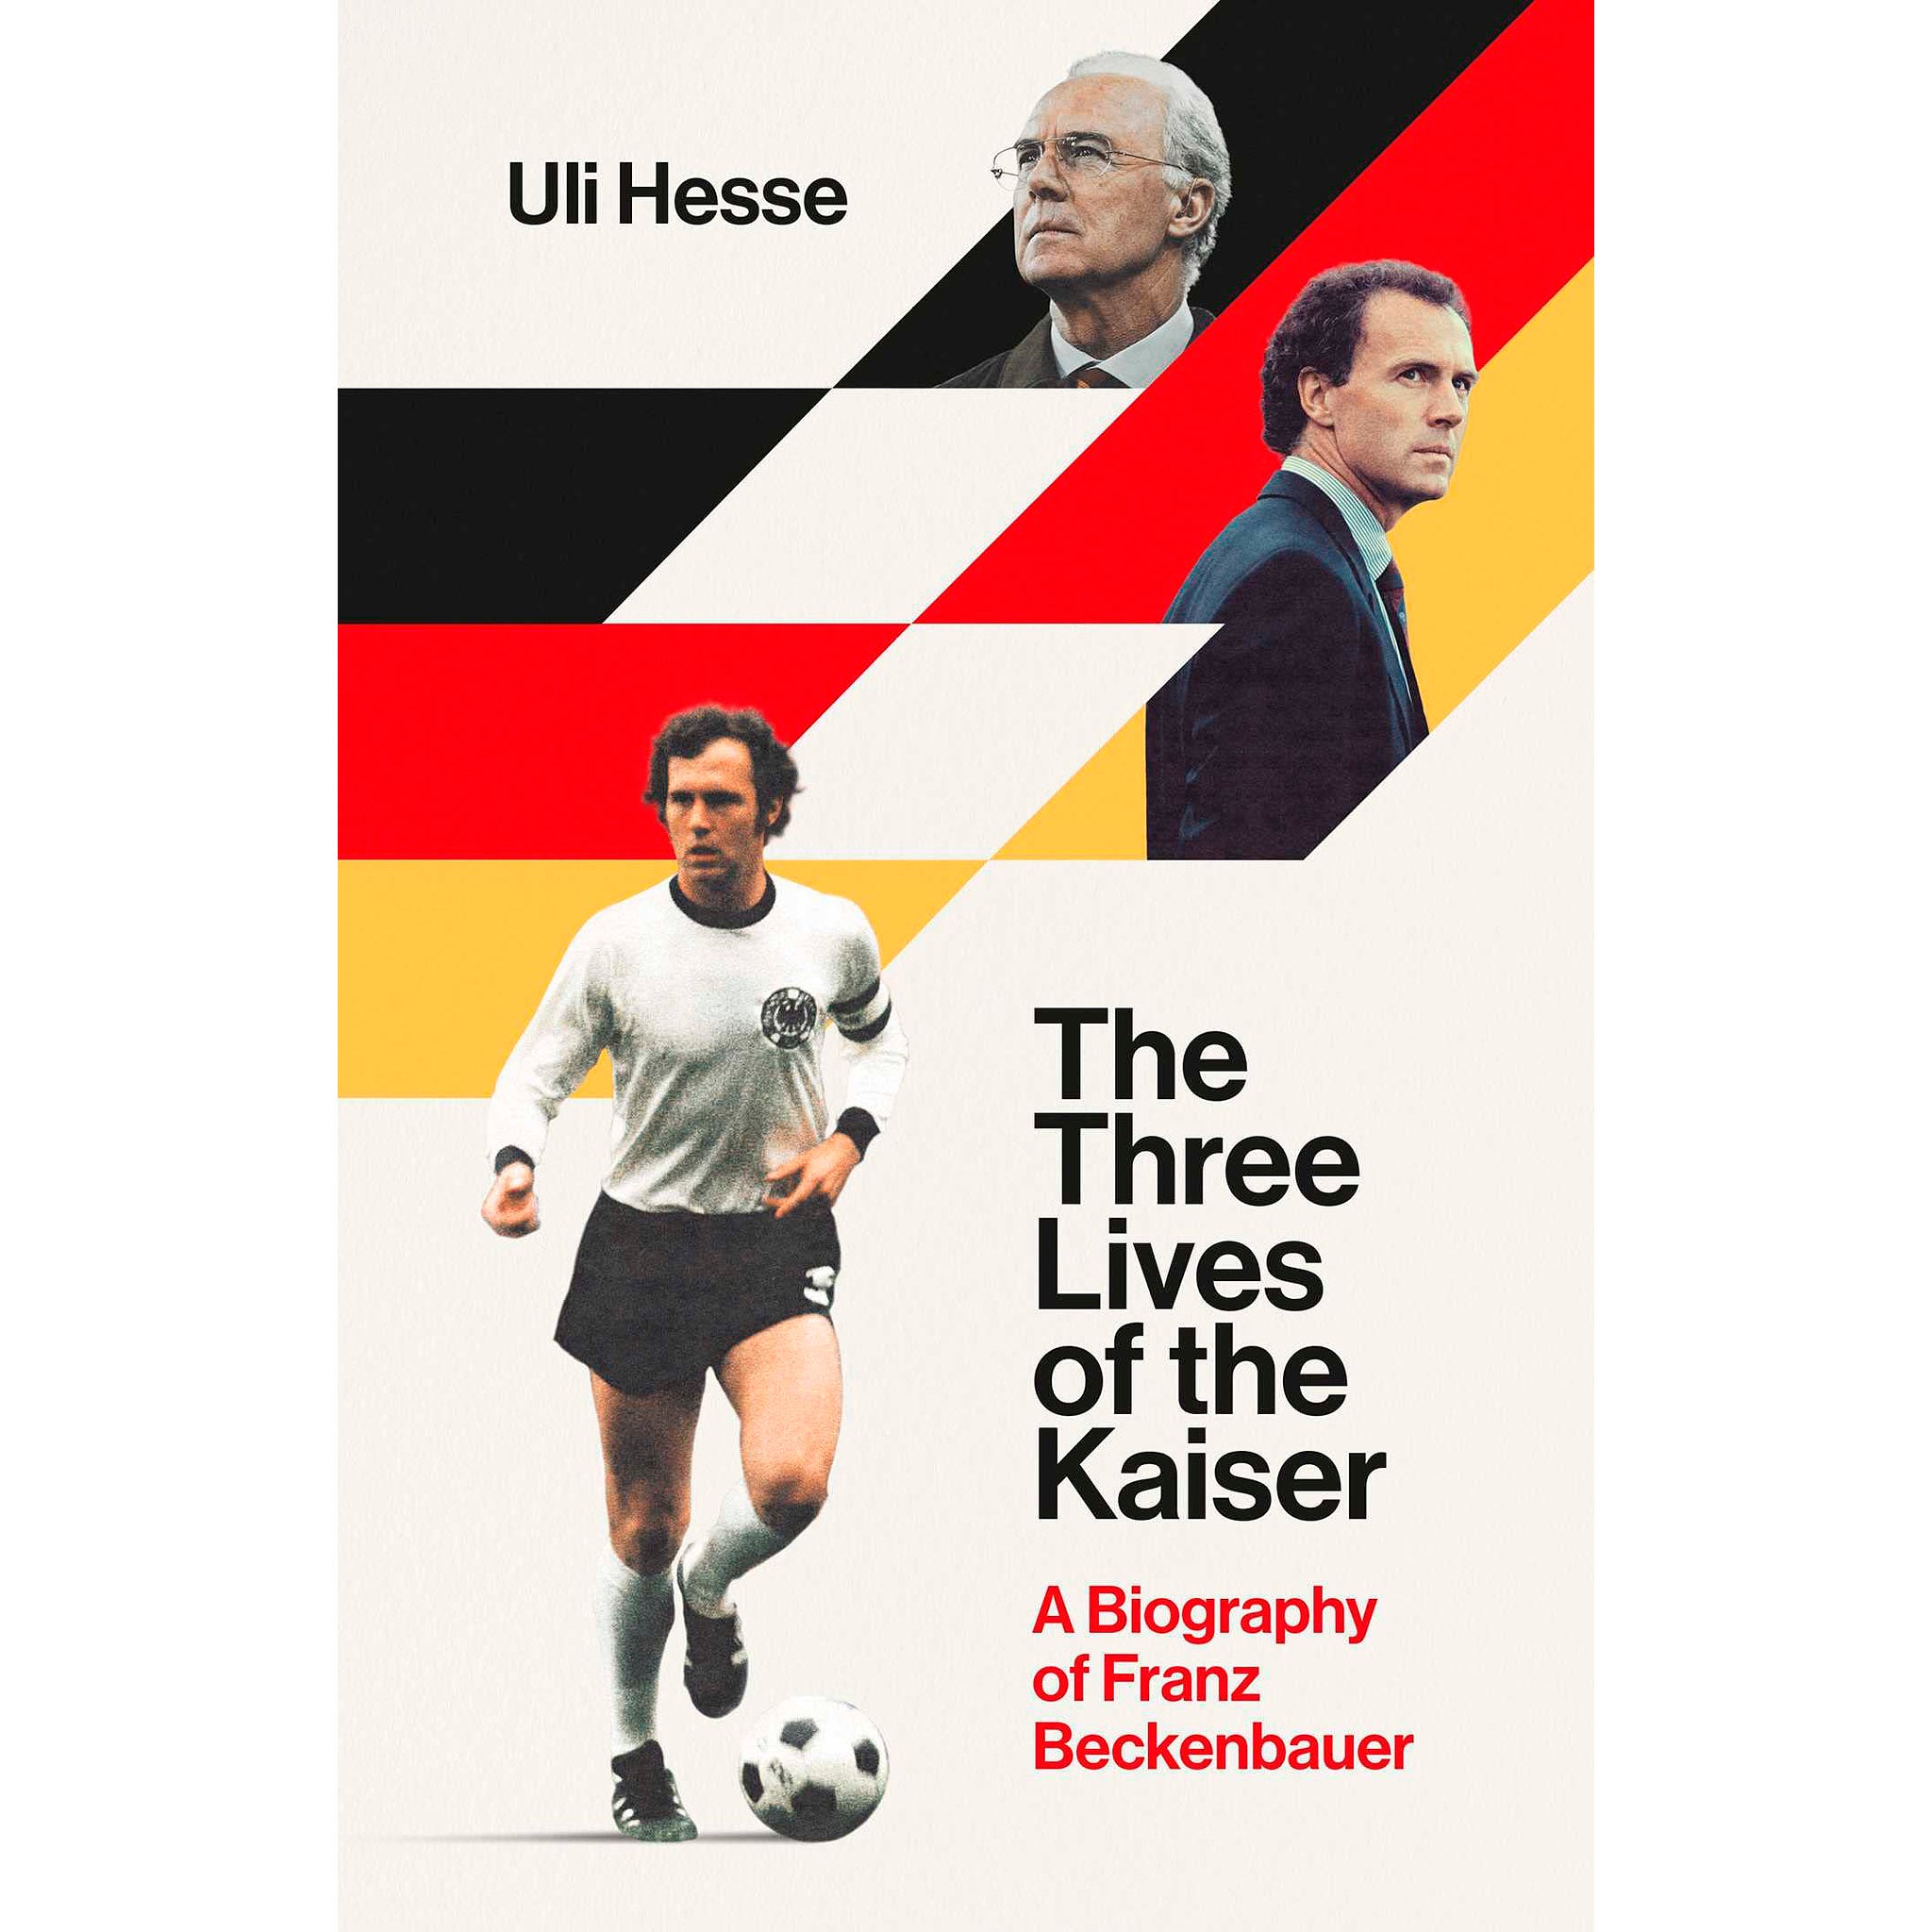 The Three Lives of the Kaiser – A Biography of Franz Beckenbauer